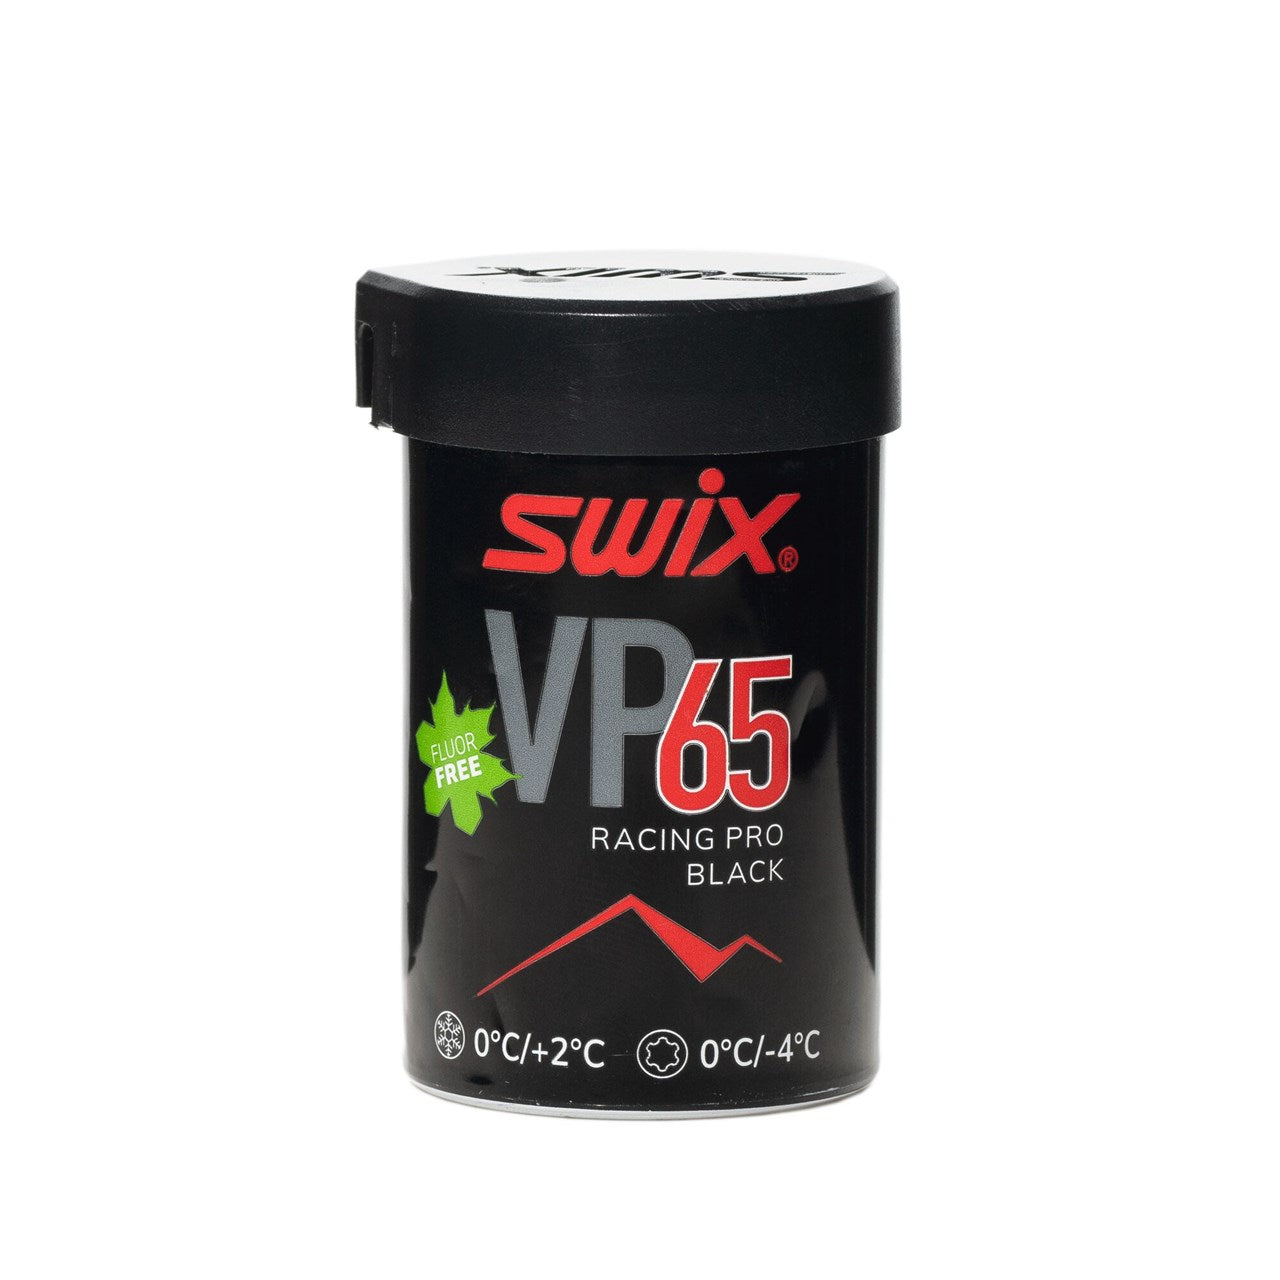 Se Swix VP65 Pro Black/Red 0âºC/+2âºC (43 g) hos RejseGear.dk